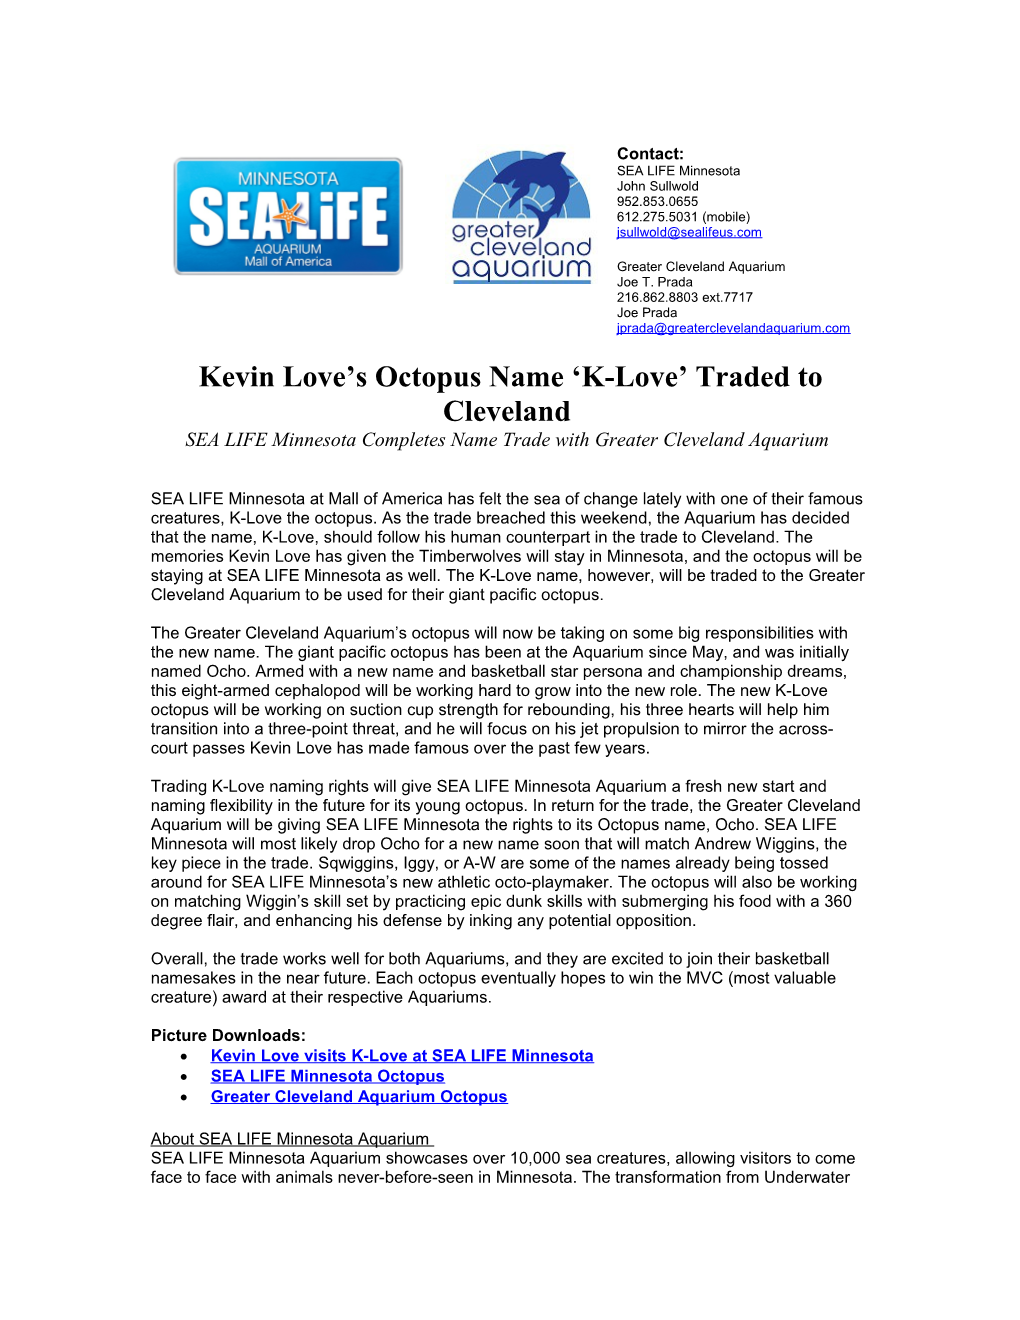 Kevin Love Visits K-Love at SEA LIFE Minnesota